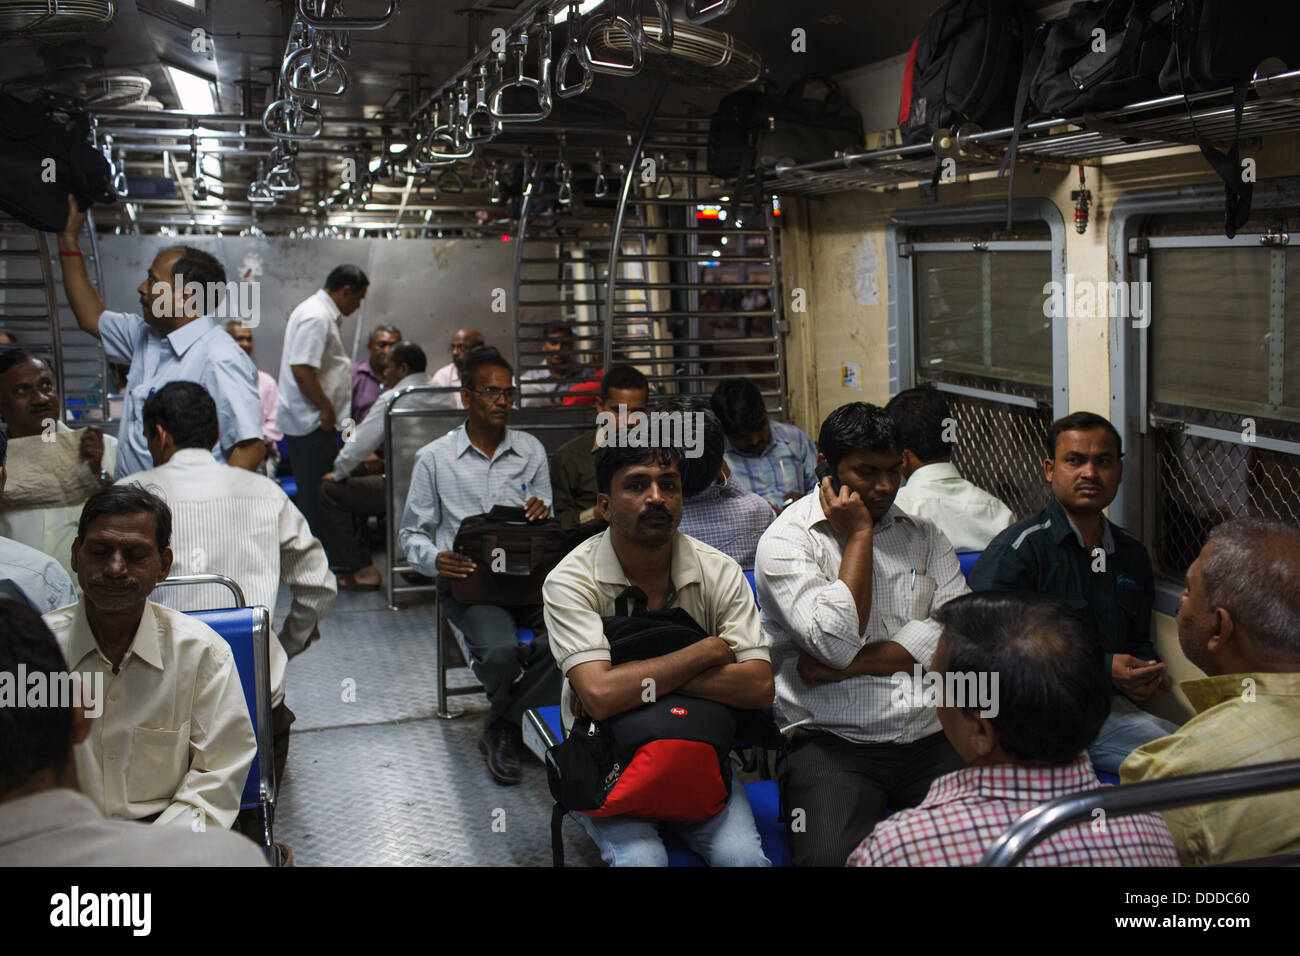 Passengers and trains at crowded Chhatrapati Shivaji Terminus (Victoria Terminus) railway station in Mumbai, India. Stock Photo